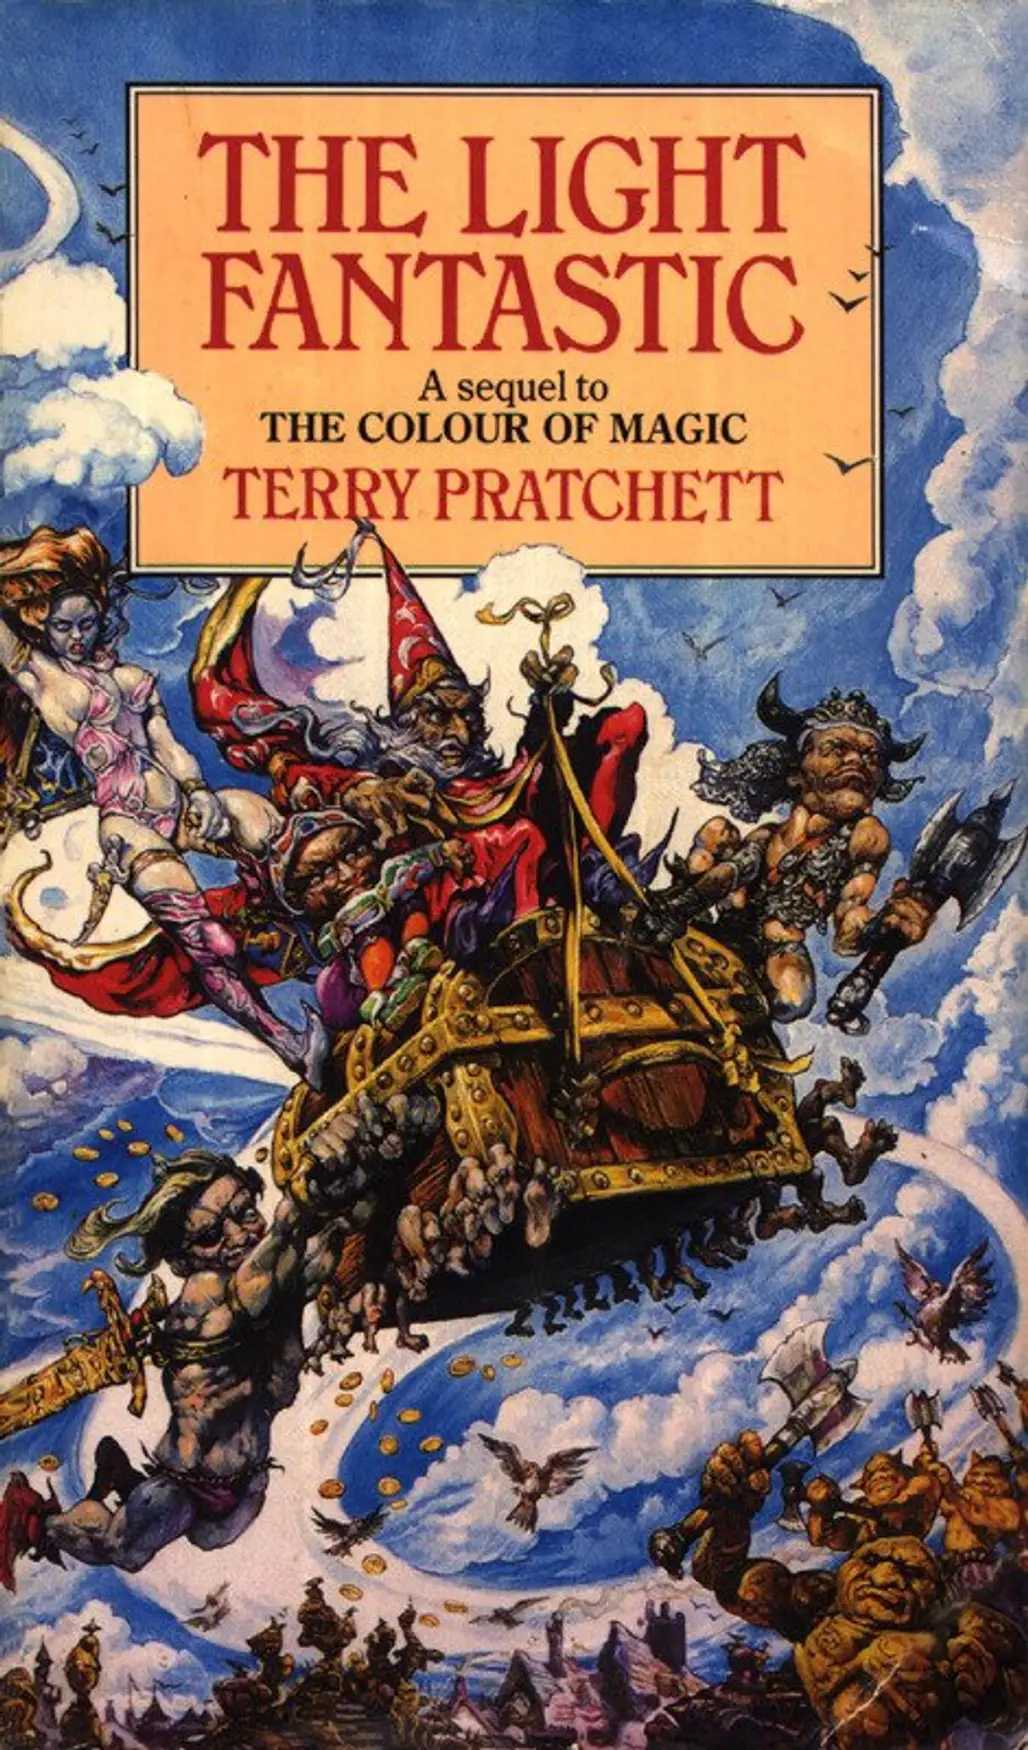 Discworld Series by Terry Pratchett